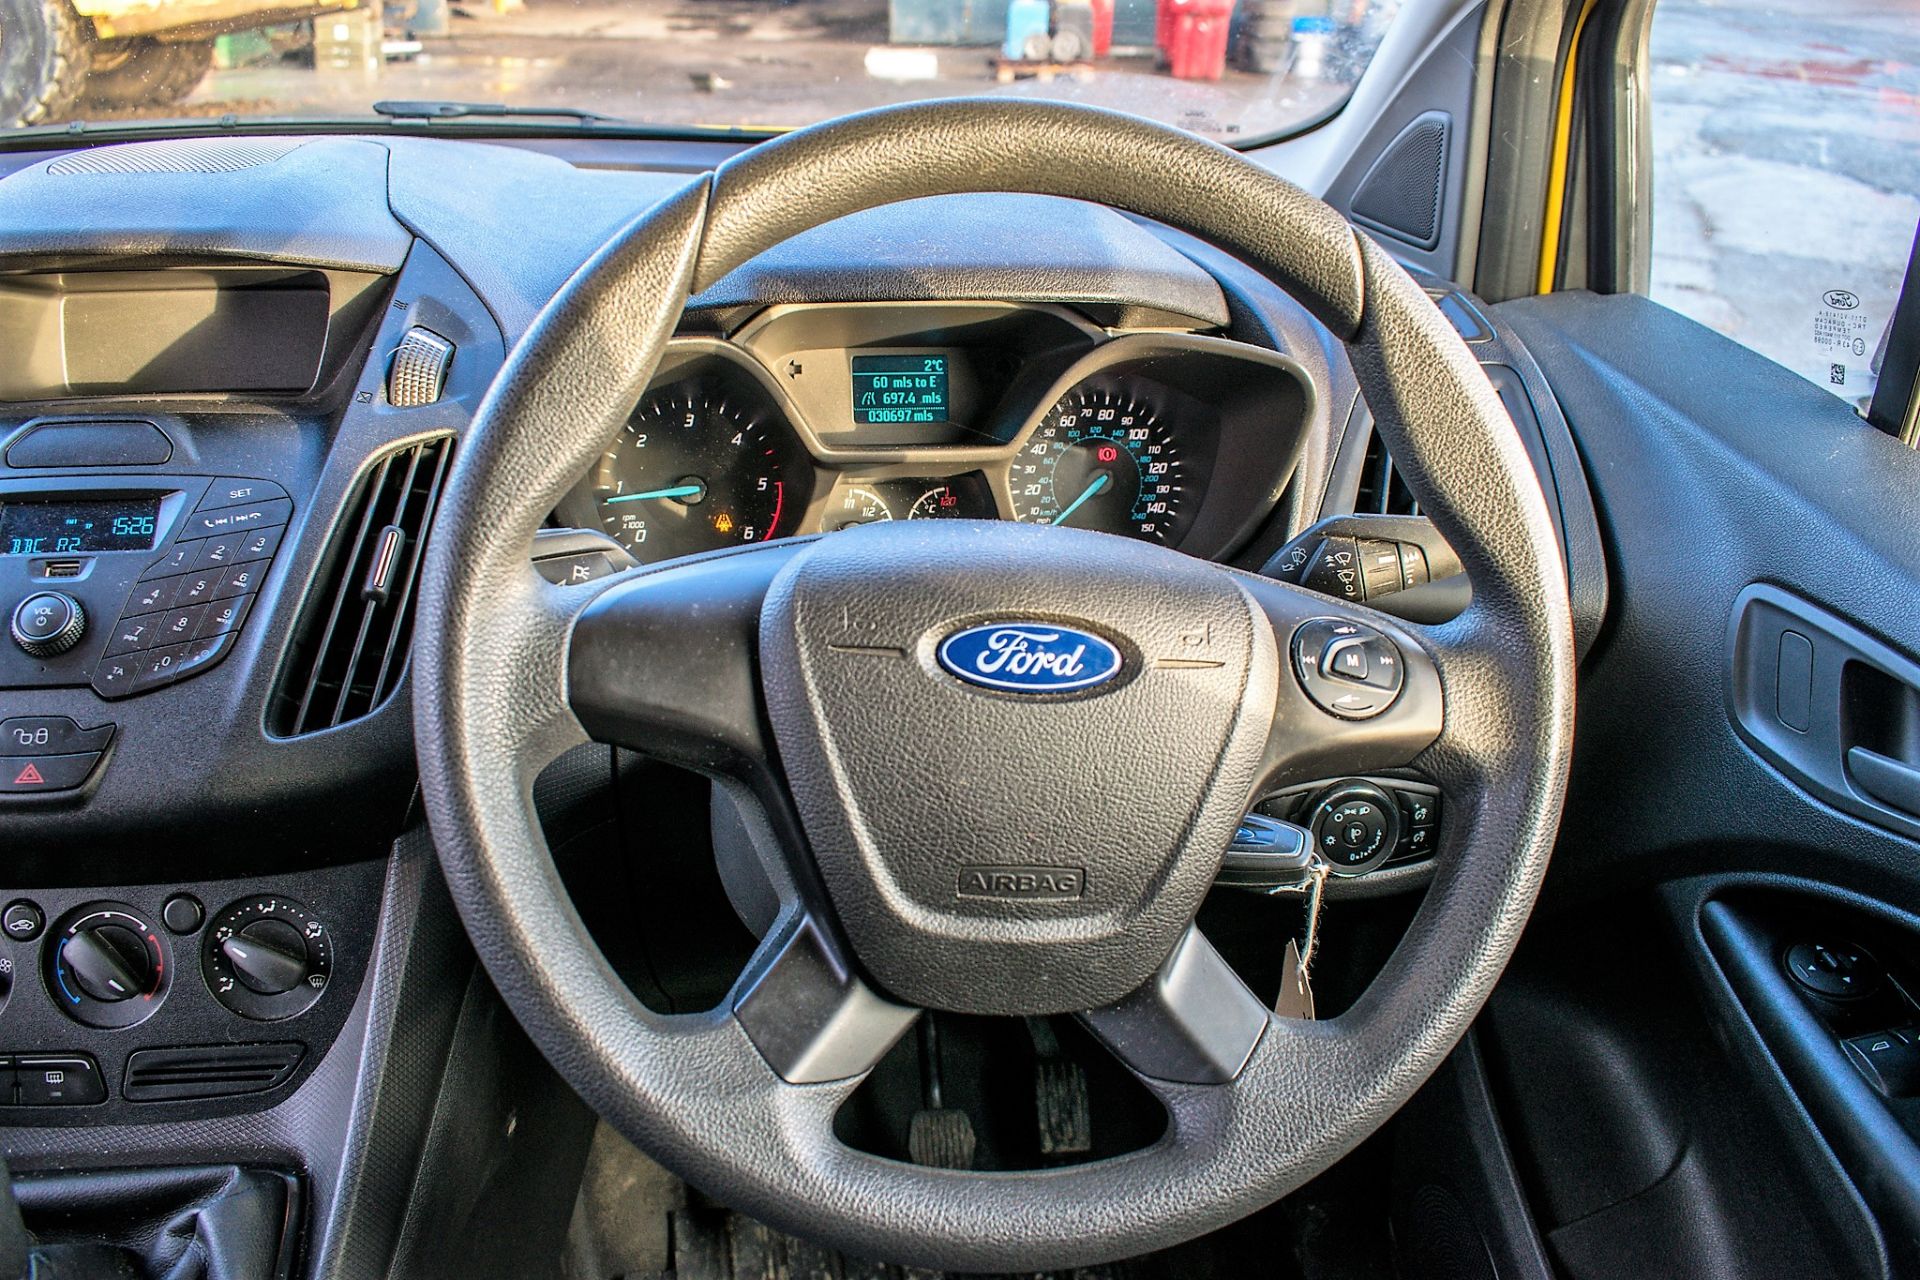 Ford Transit Connect 200 1560cc diesel panel van - Image 9 of 11